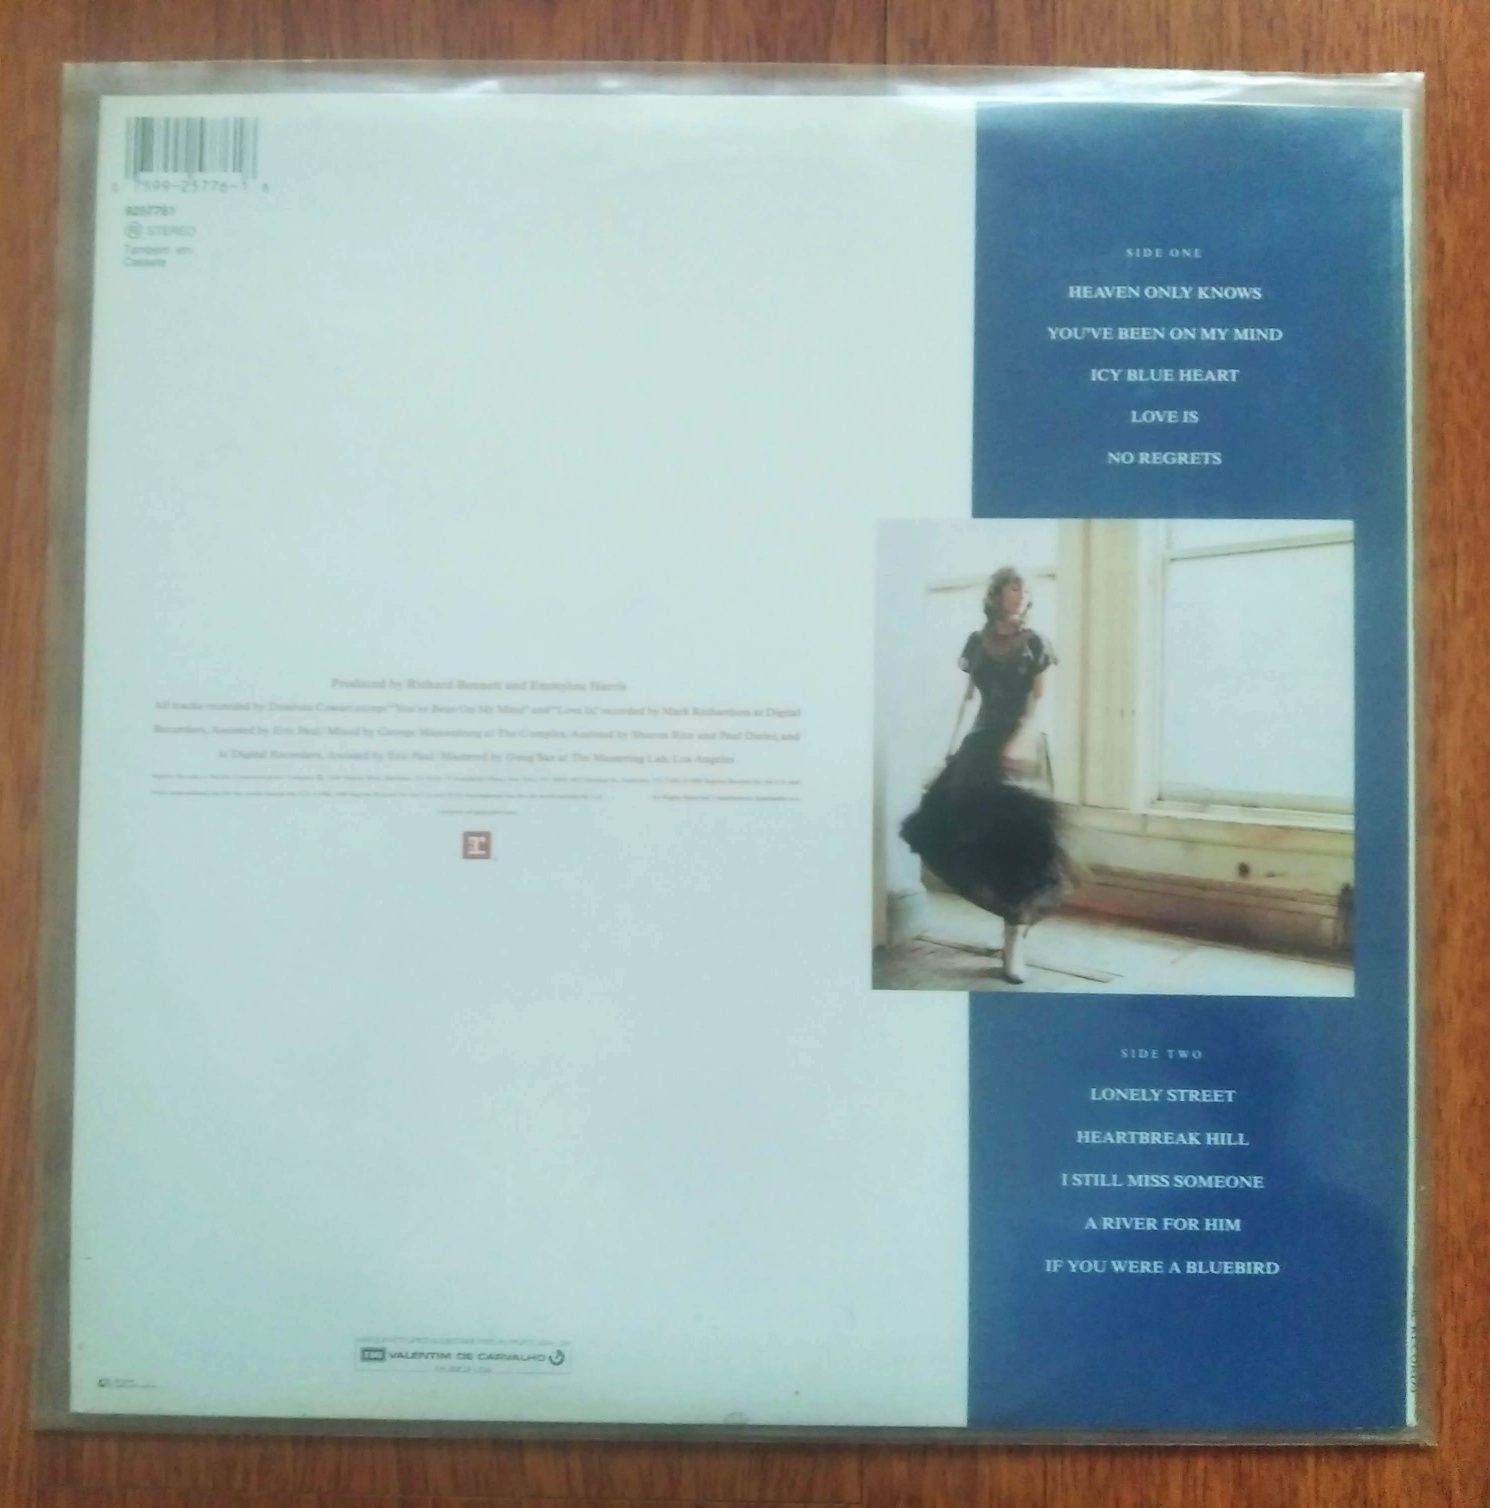 Emmylou Harris disco de vinil "Bluebird"